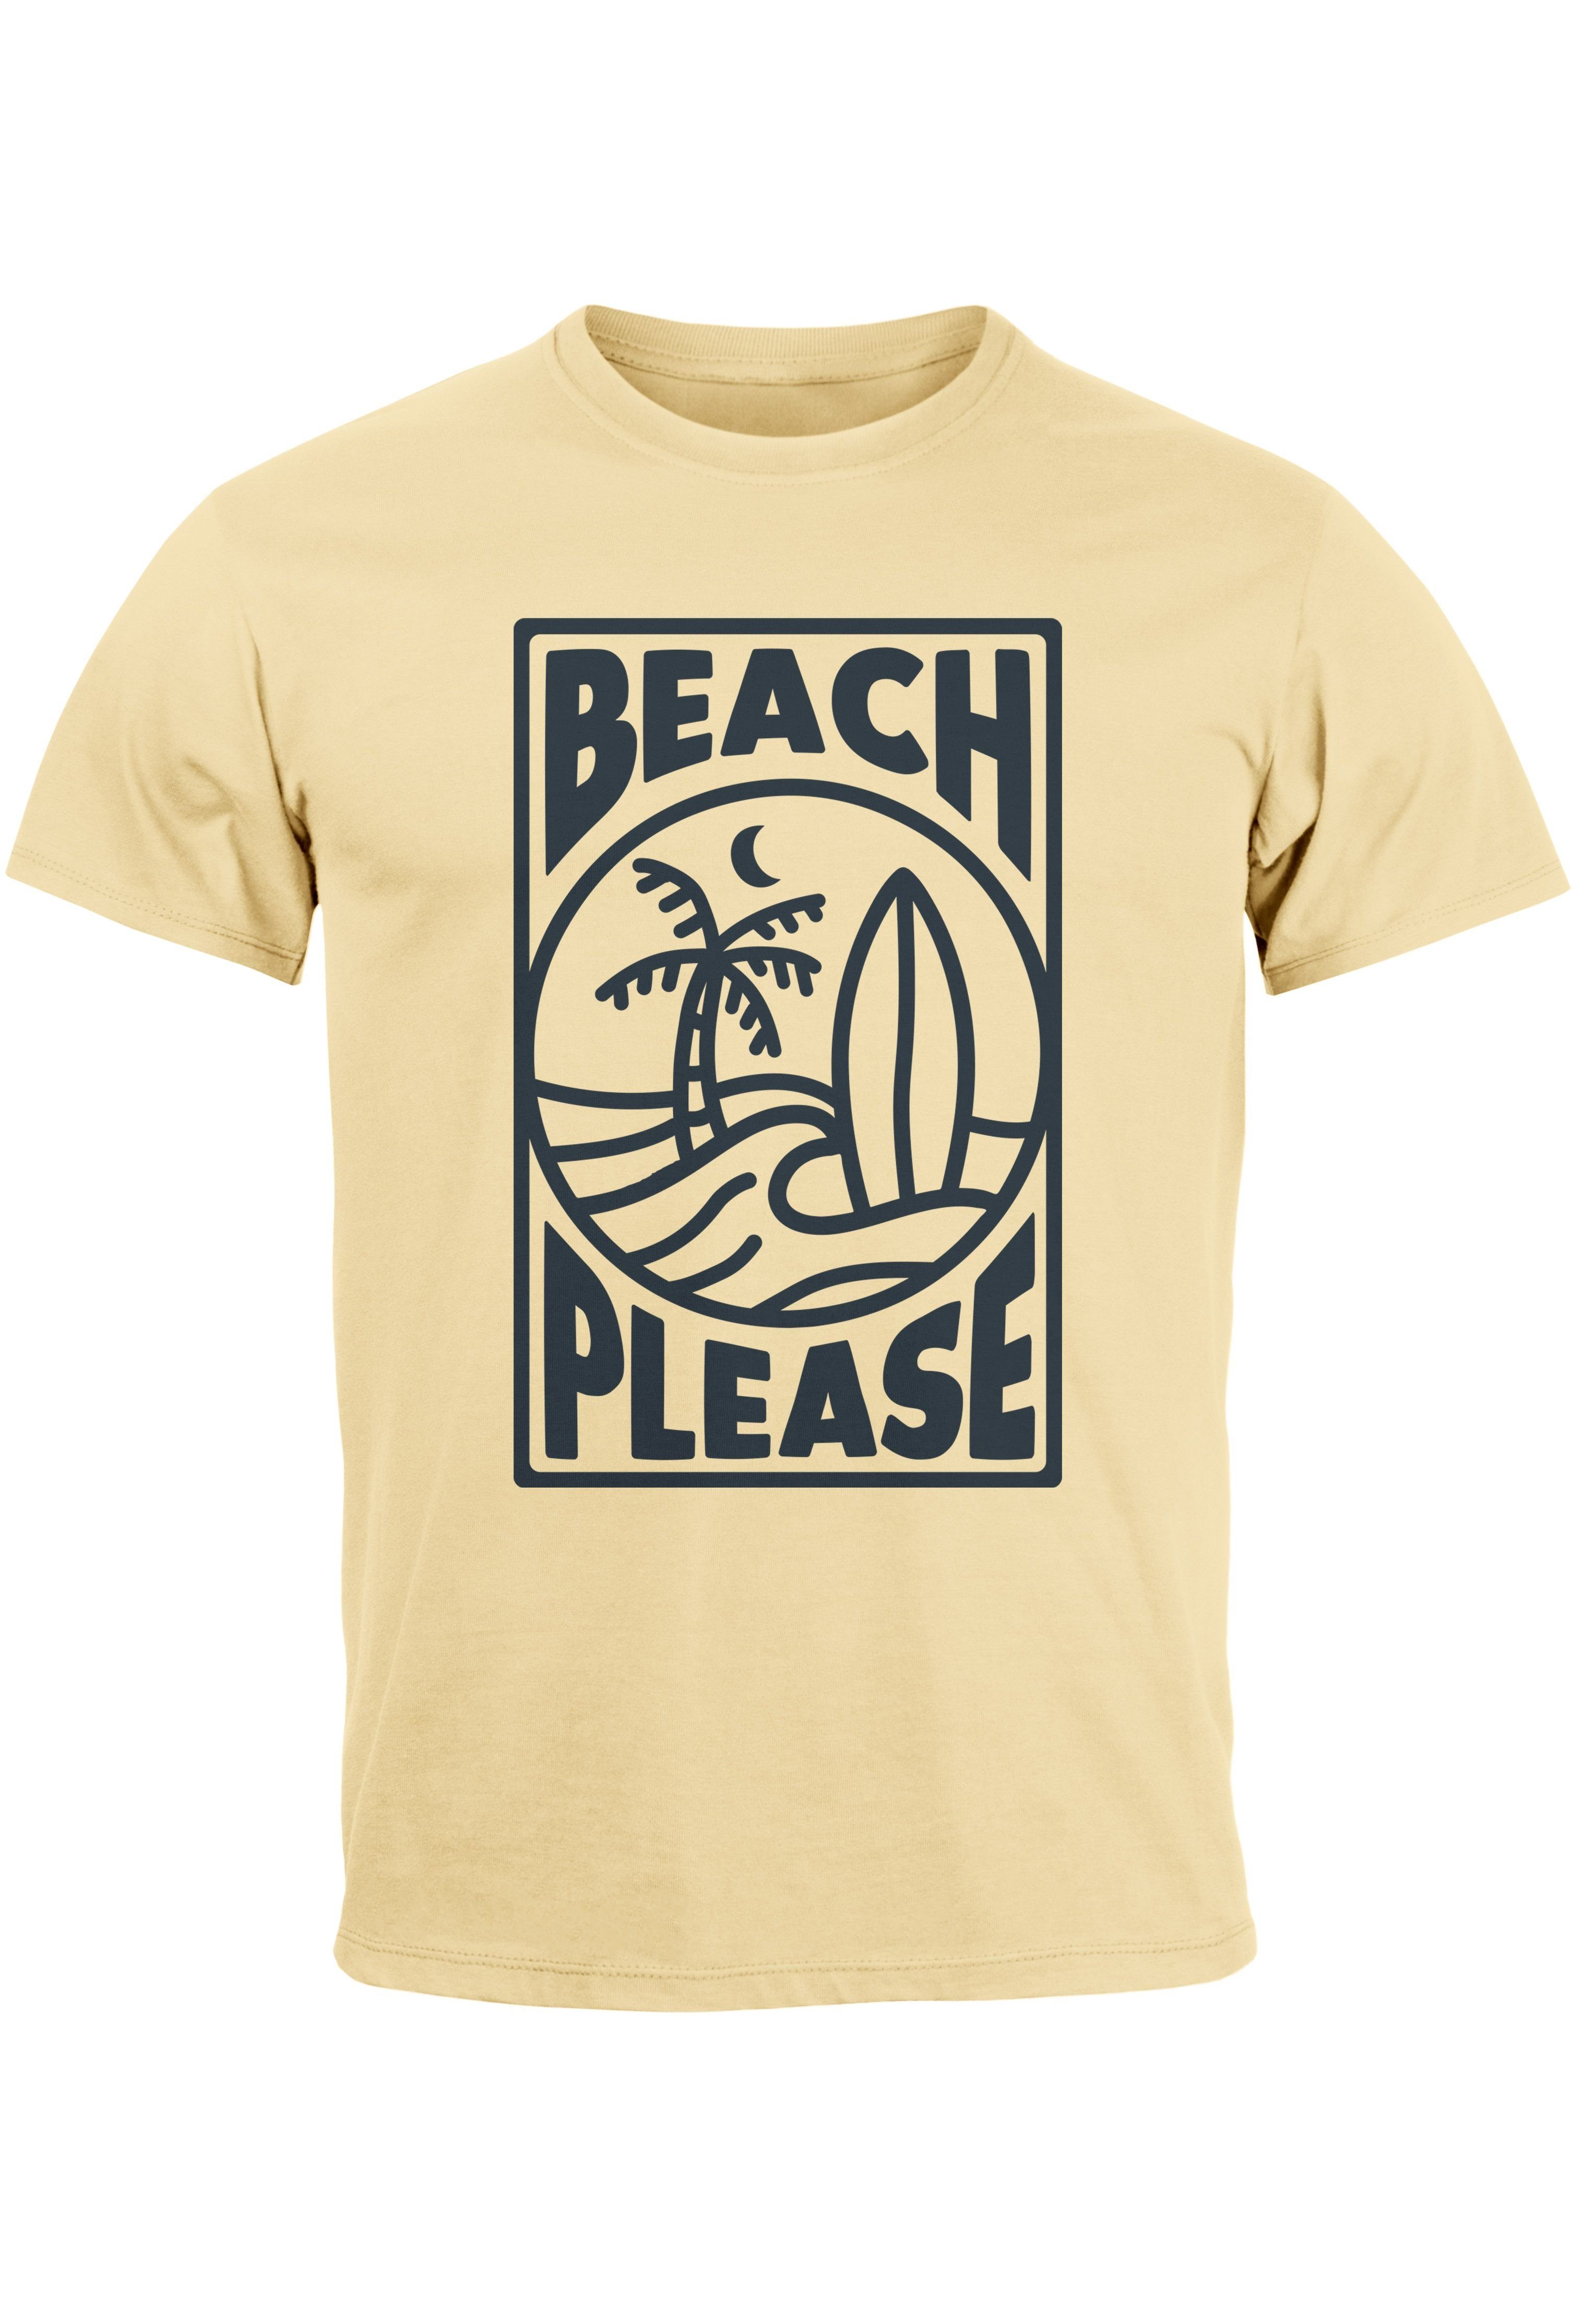 Neverless Print-Shirt Herren T-Shirt Beach Please Surfing Surfboard Wave Welle Sommer Print mit Print natur